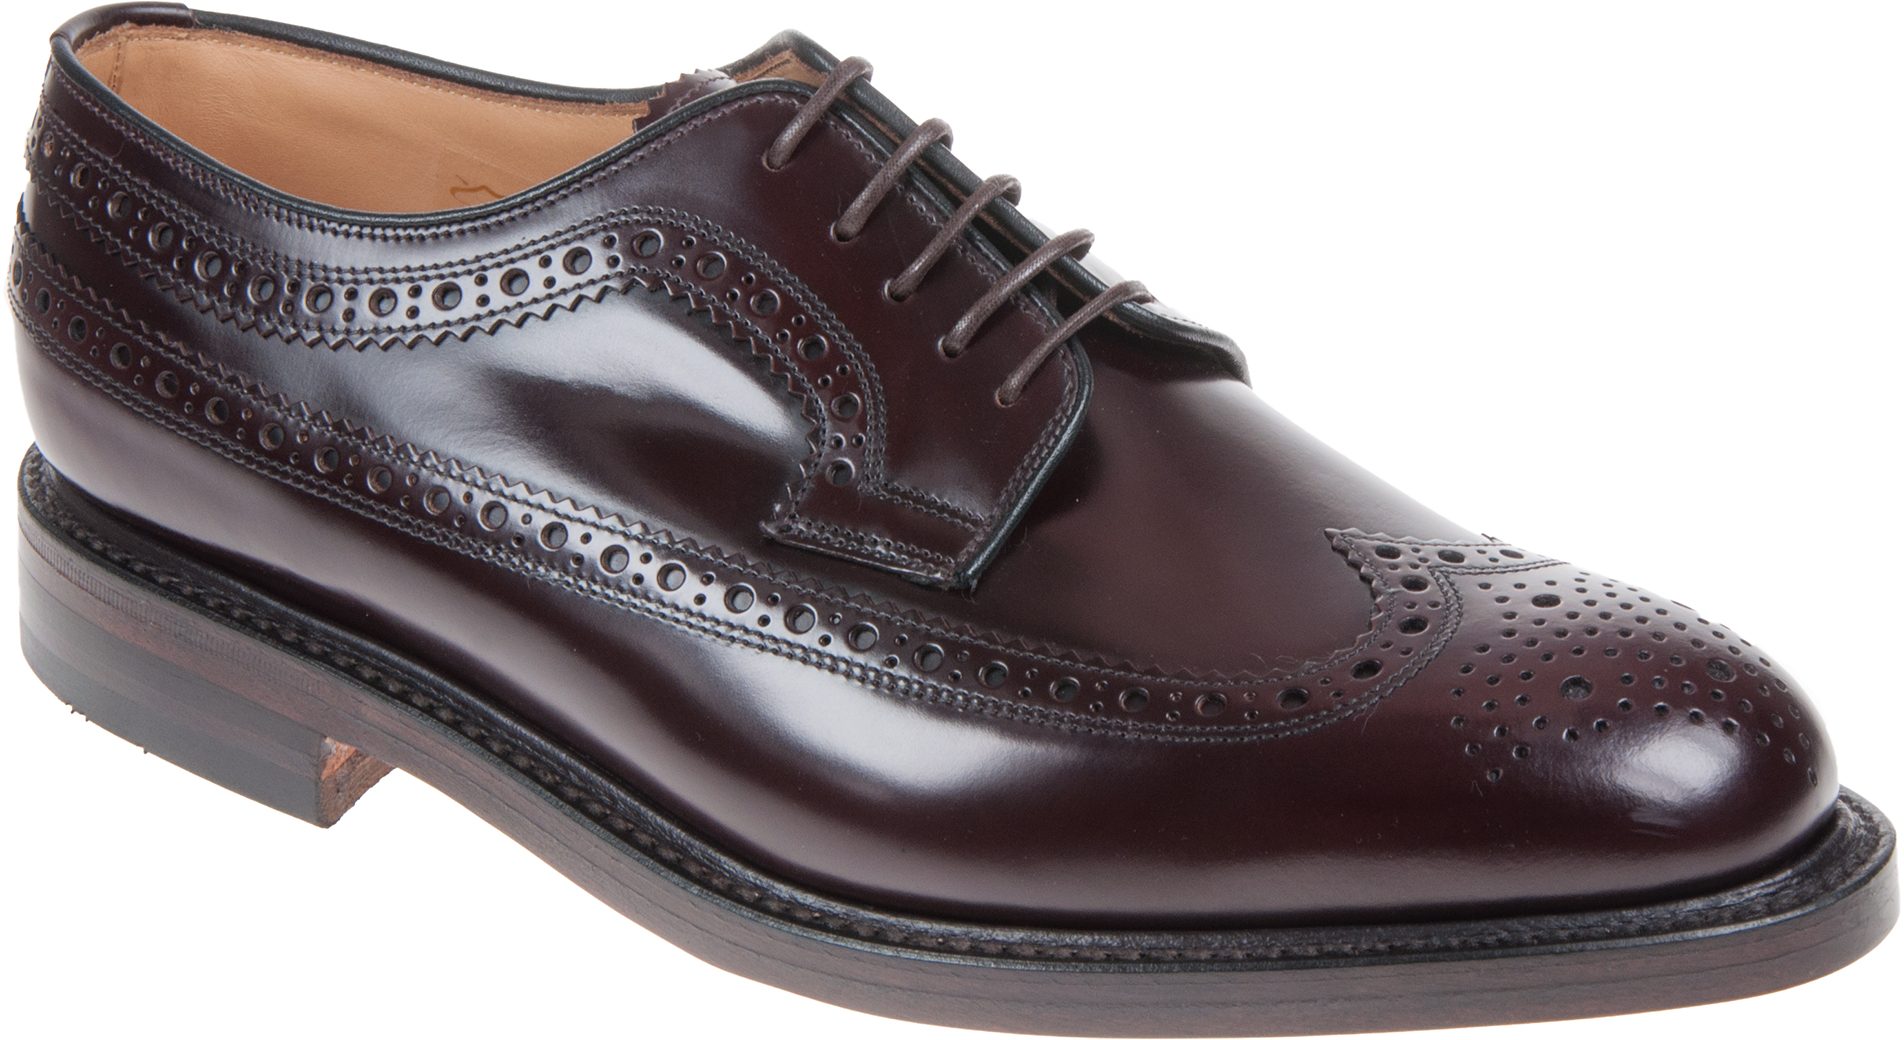 Loake Royal Oxblood Polished Leather - Brogues - Humphries Shoes